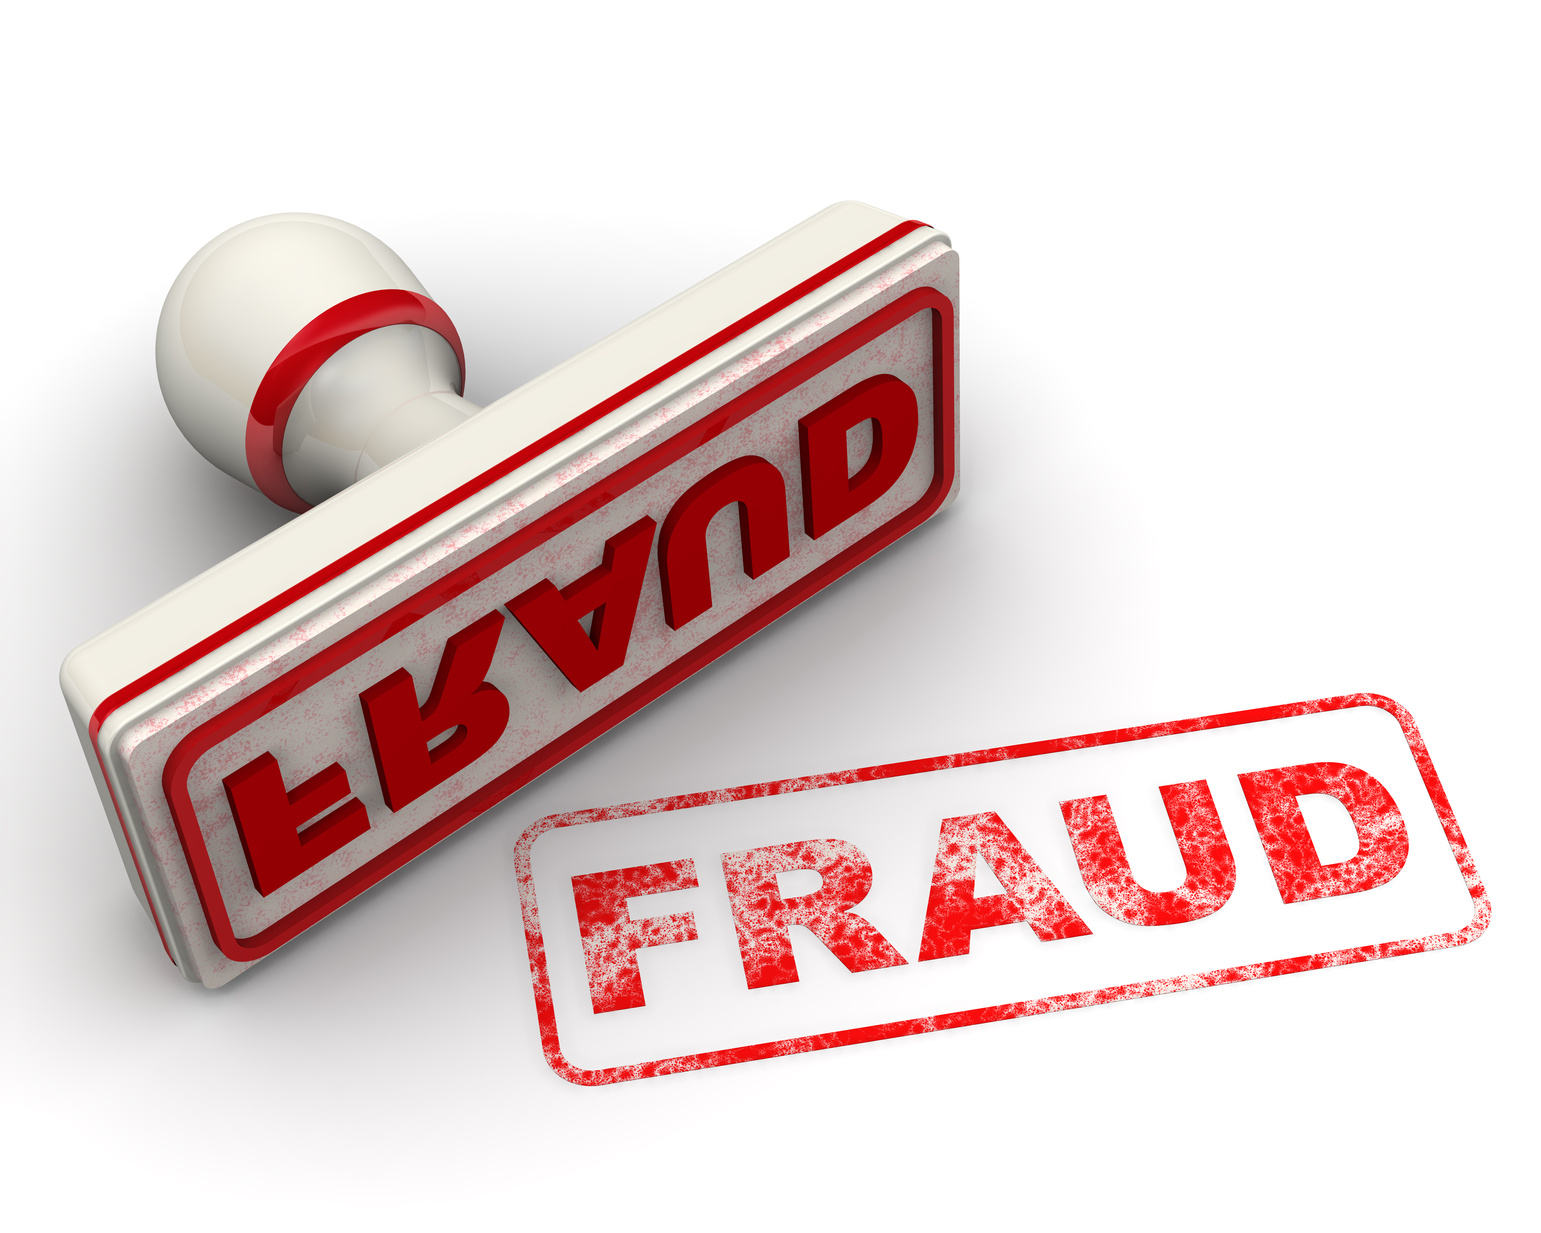 FNB Ponzi Scam: Bank to reimburse affected customers